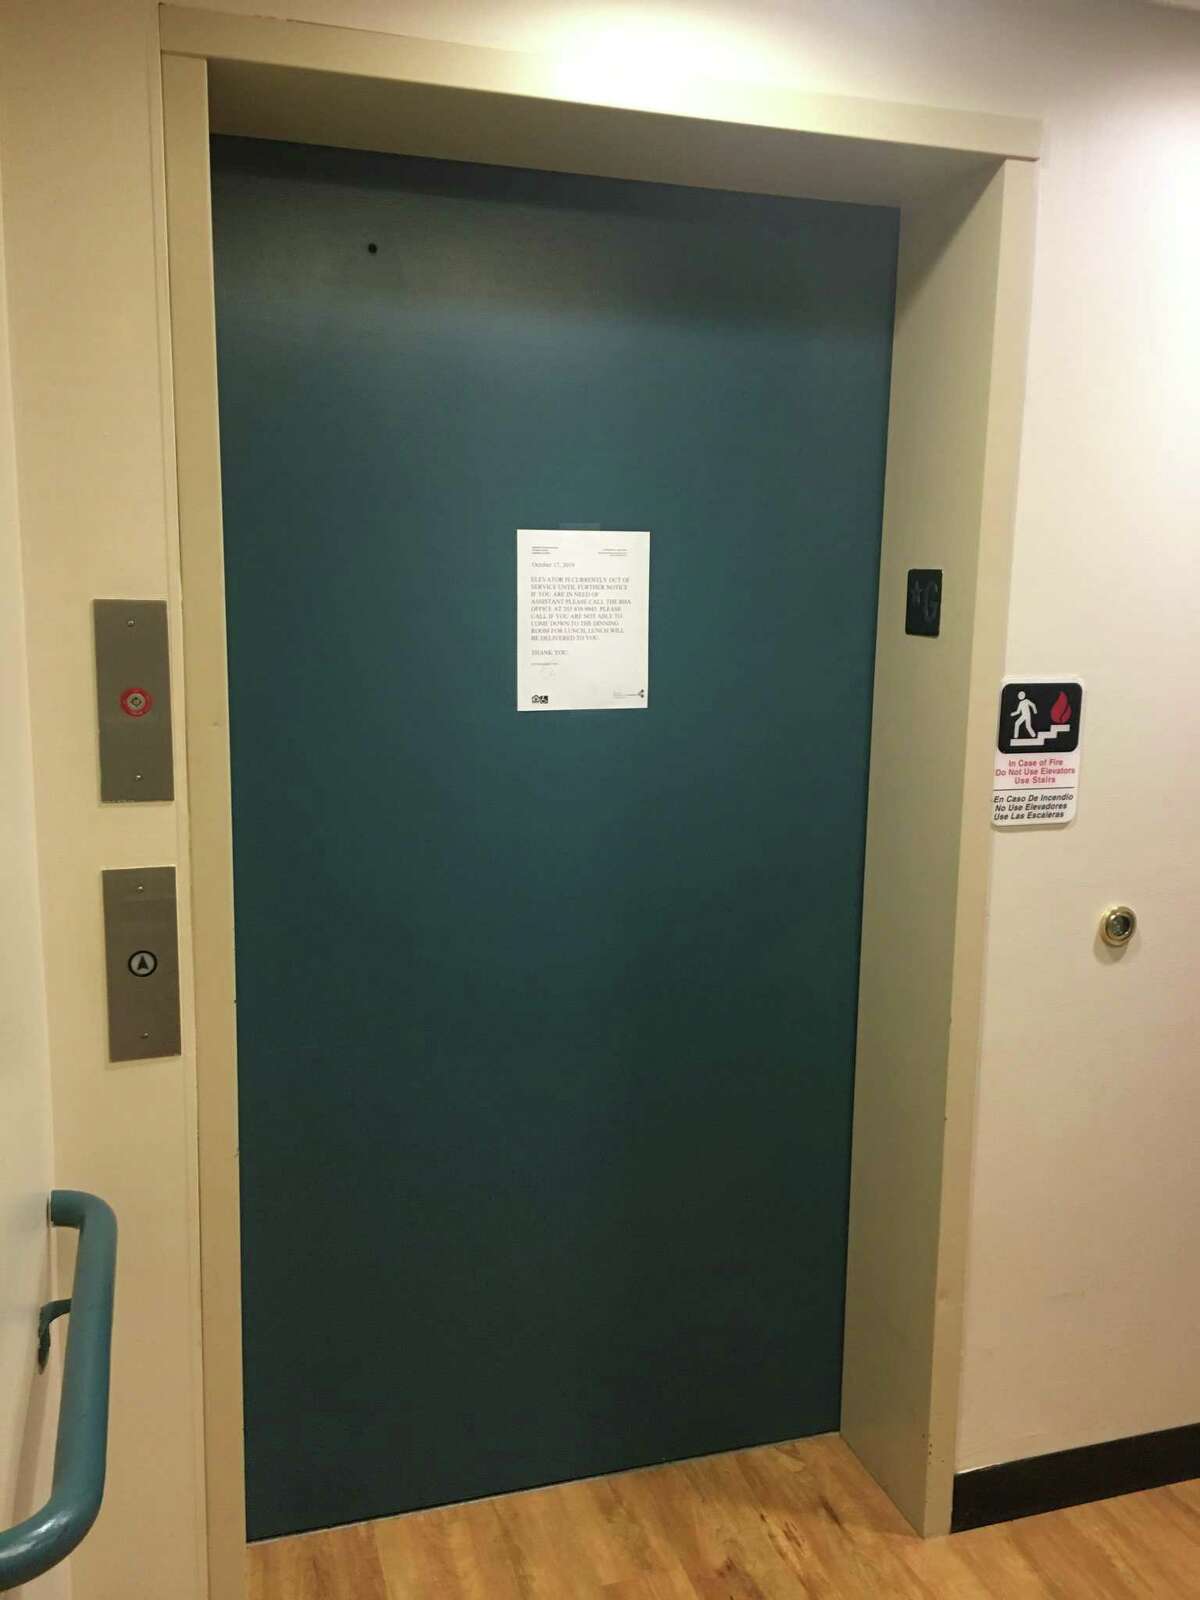 The broken elevator at Ridgefield Housing Authority.